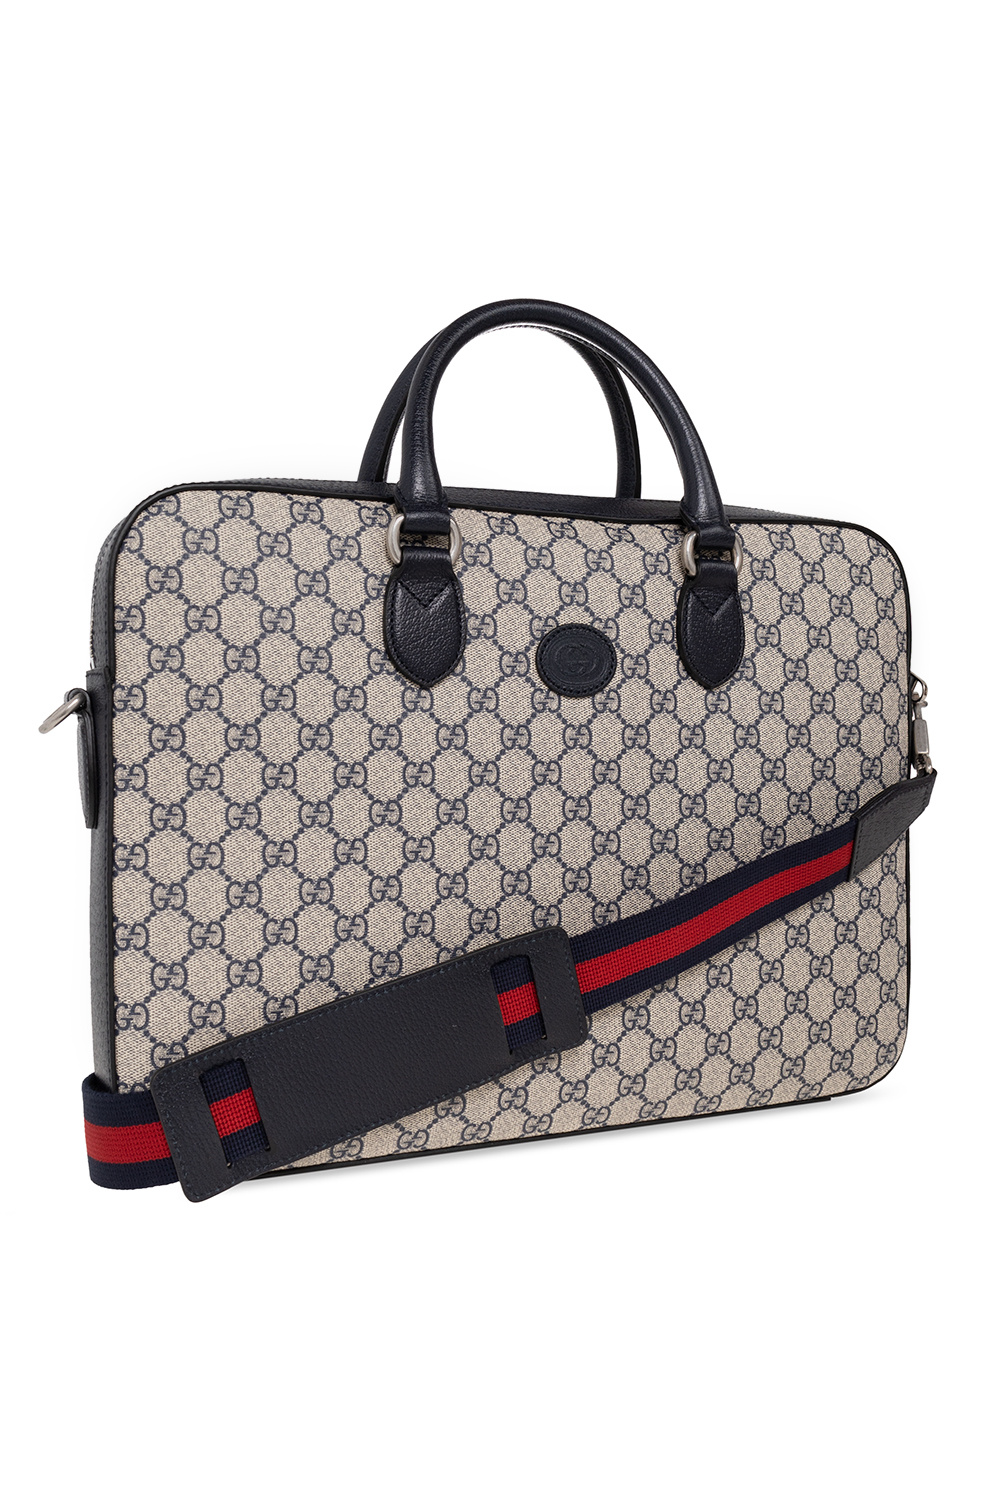 GG Supreme Briefcase in Beige - Gucci